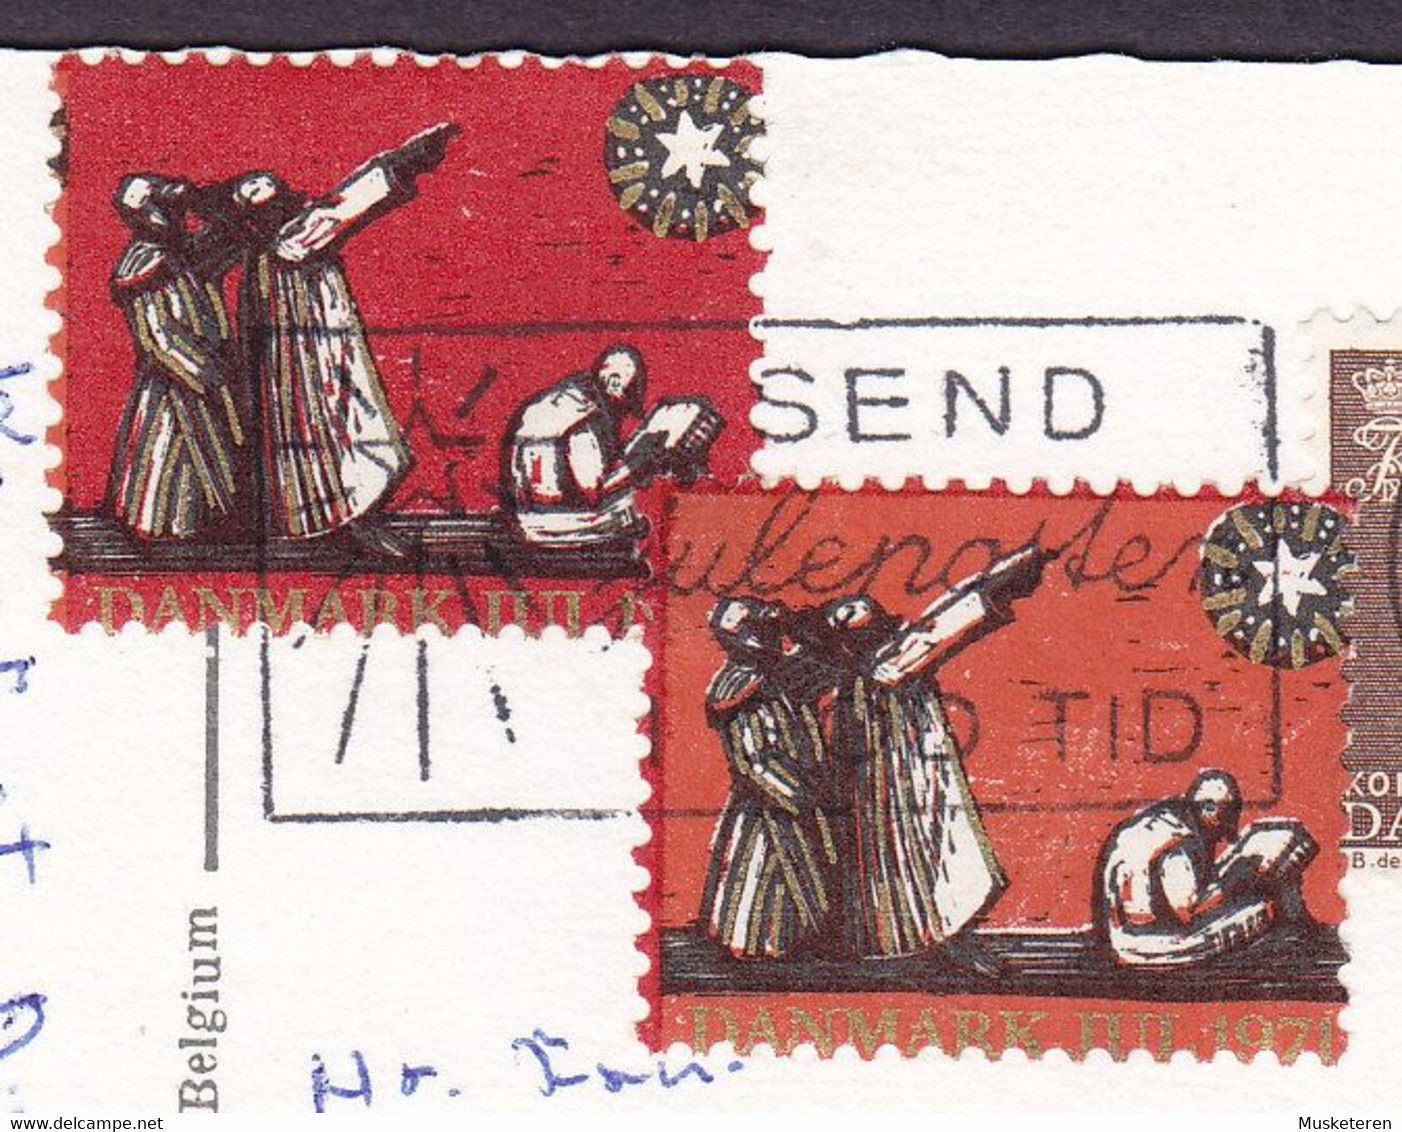 Denmark ERROR Variety Misc. Perforation 3x Christmas Seals Three Wise Men Following Star Merry Christmas KØBENHAVN 1971 - Plaatfouten En Curiosa